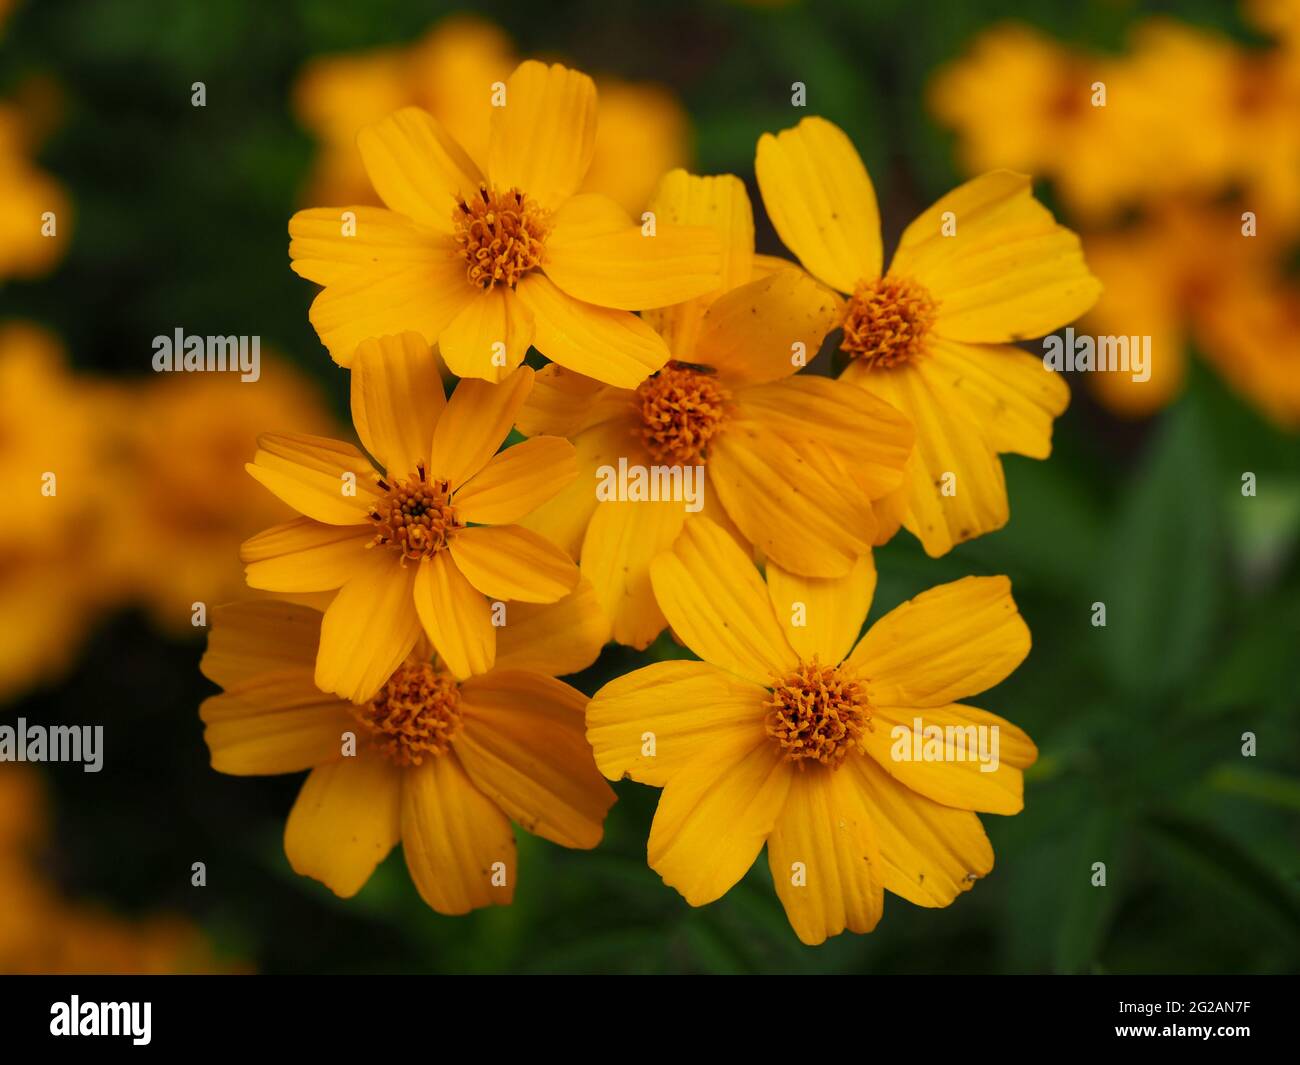 Flowers, Closeup bright golden yellow daisy-like flower of the Tree Marigold, Winter, Australia Stock Photo